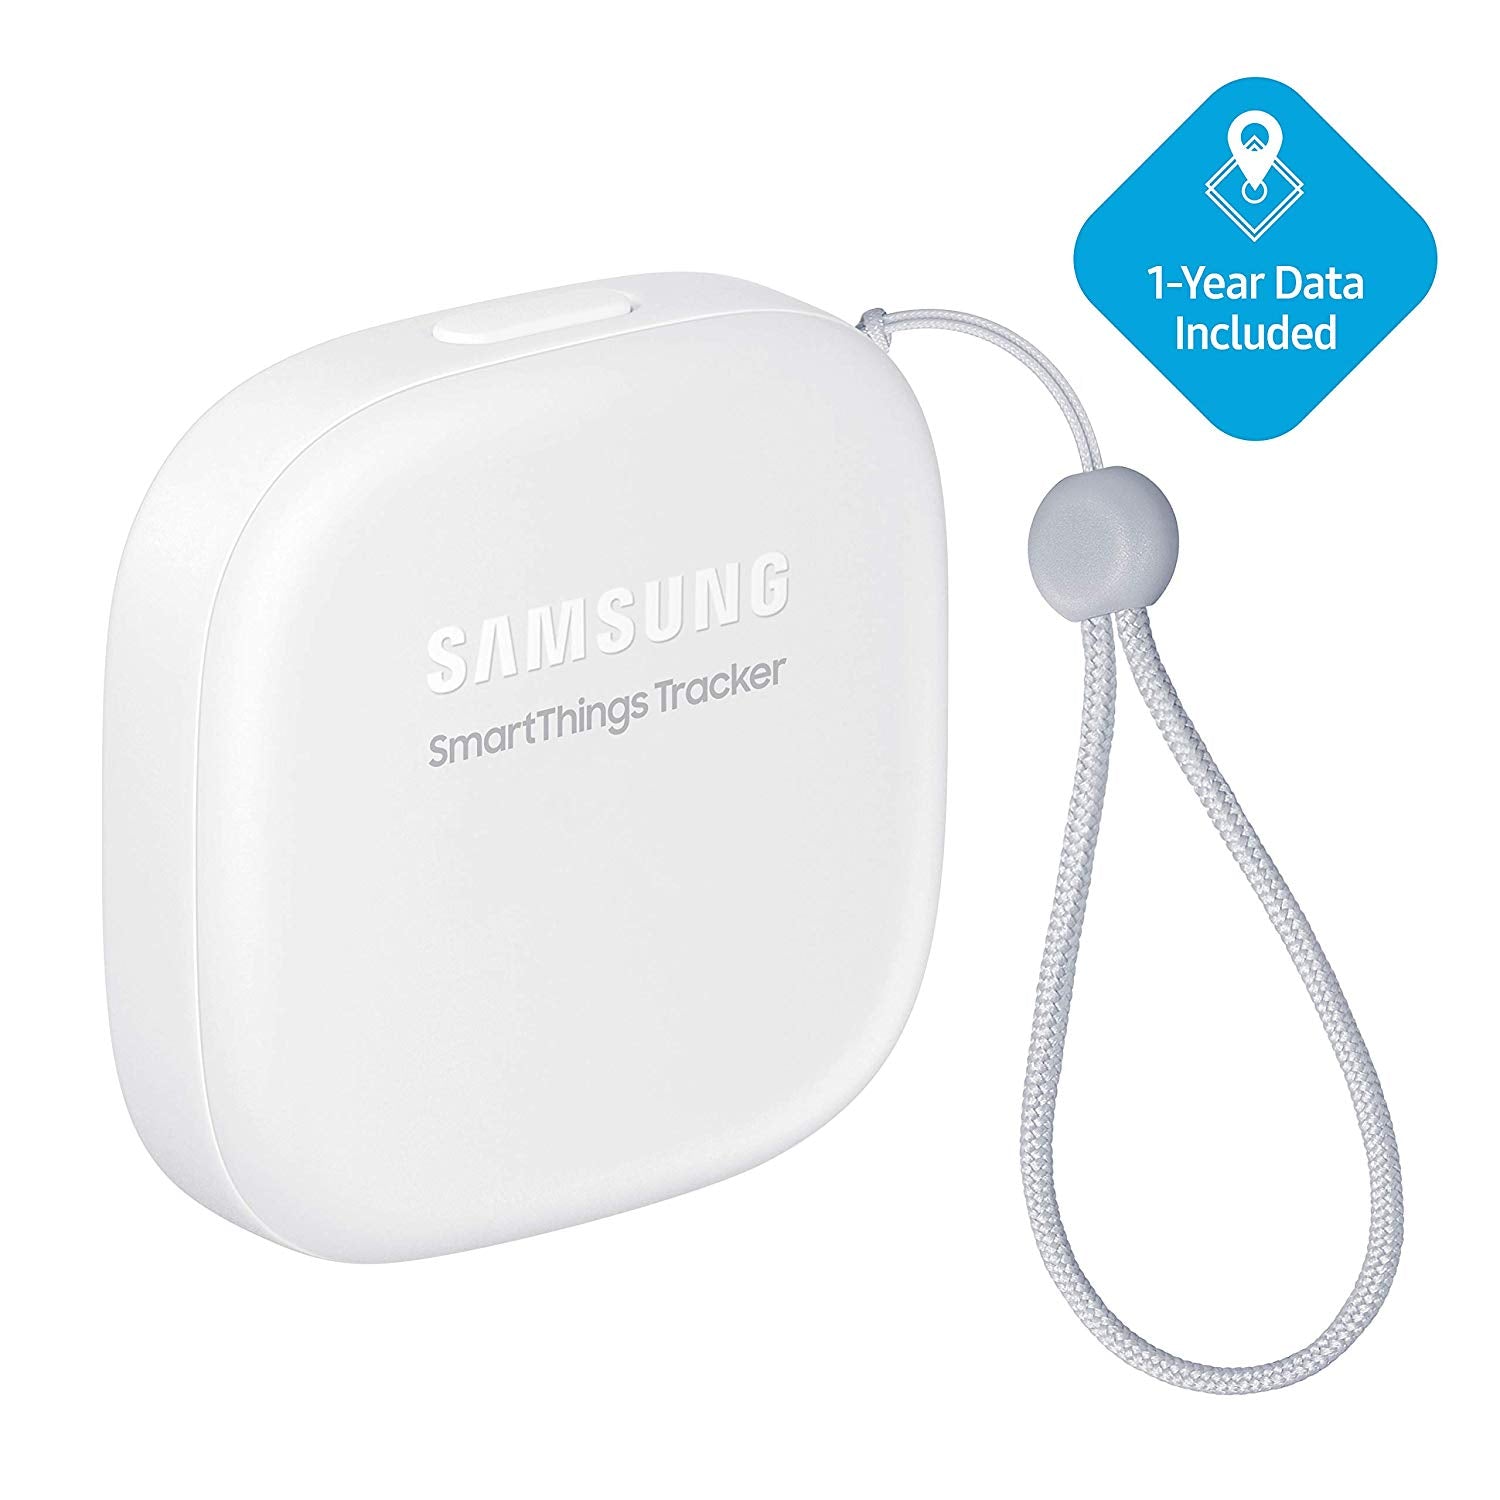 Samsung SmartThings Tracker